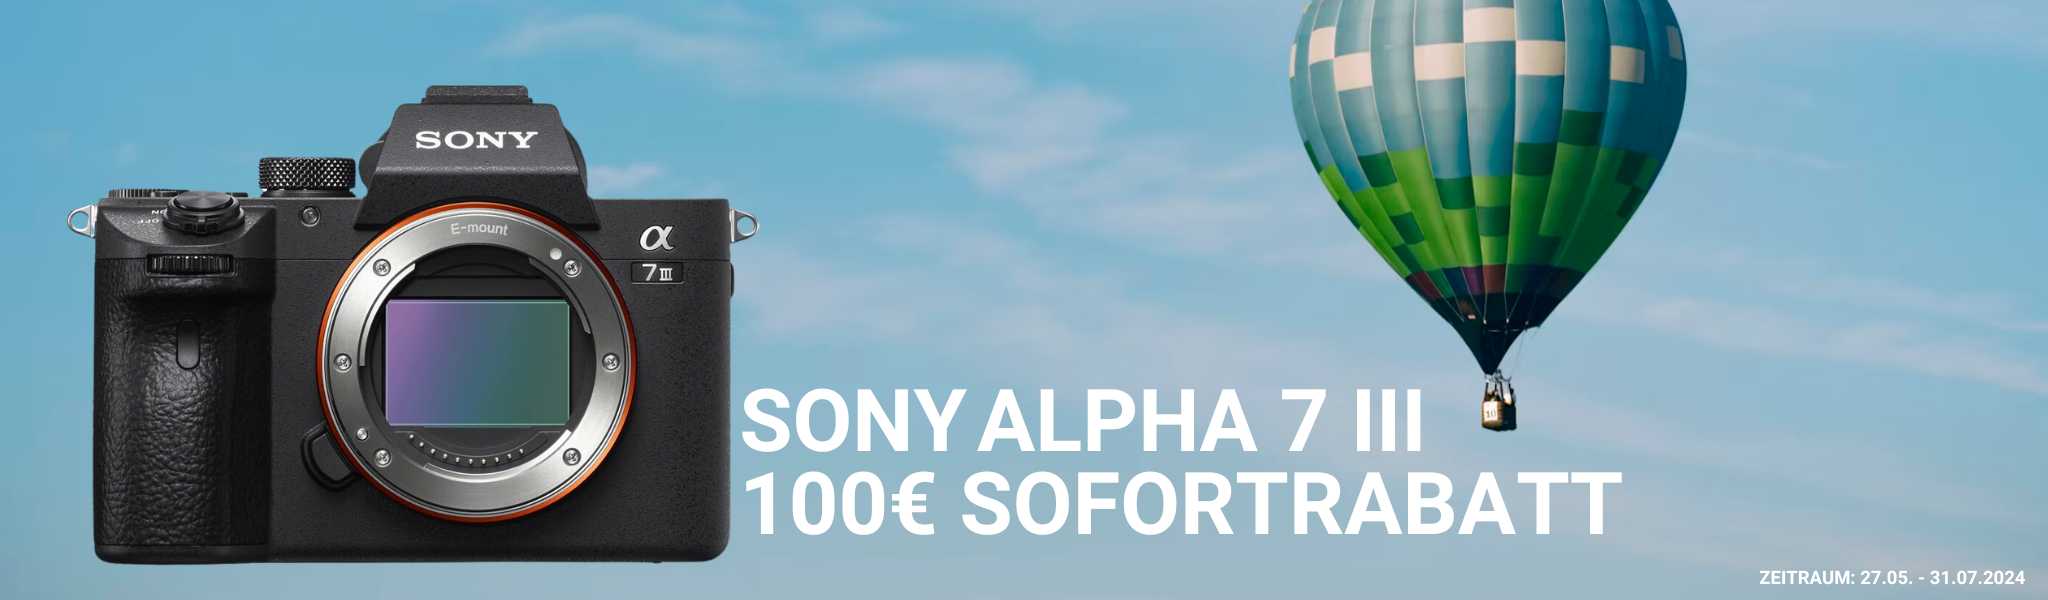 SONY ALPHA 7 III SOFORTRABATT-AKTION: 27.05. - 31.07.2024 bei Fotomax  online in Nürnberg und Berlin